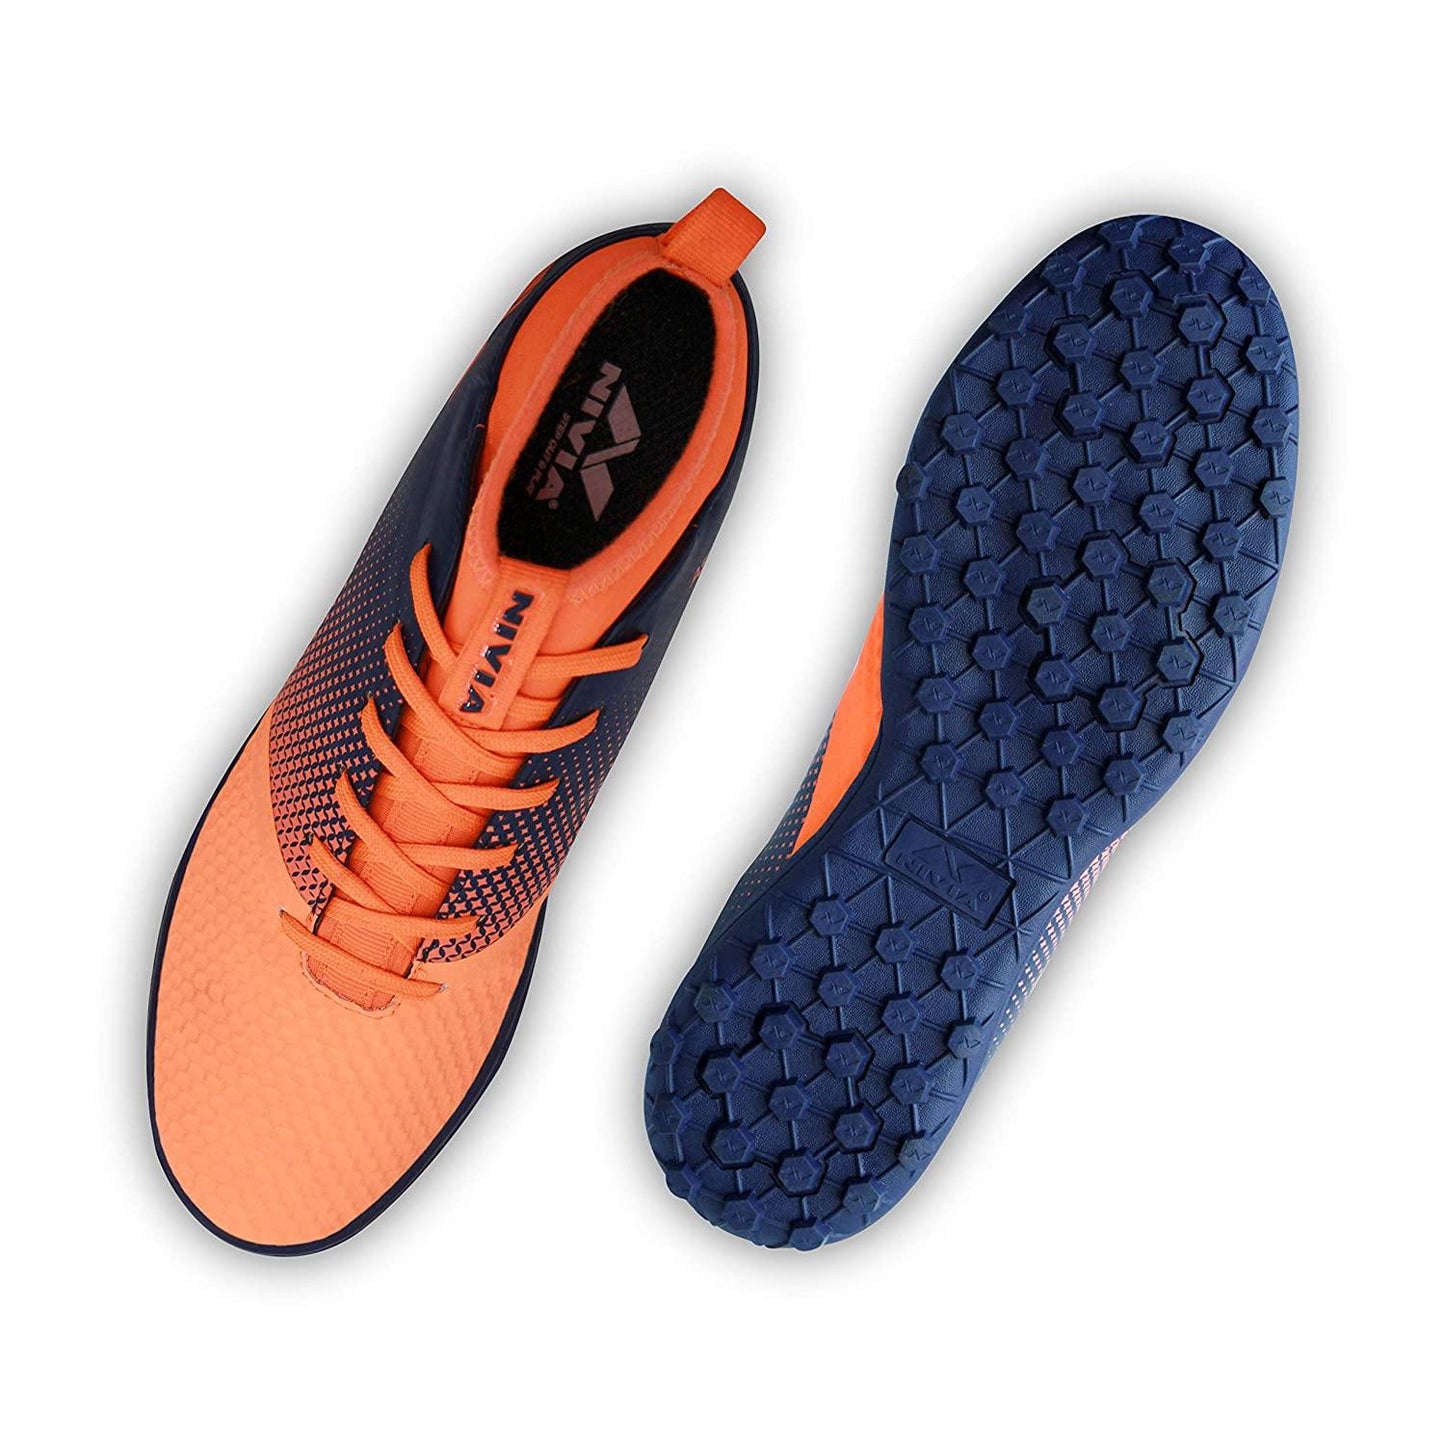 Nivia Ashtang Football Turf Shoes - Fluorescent Orange/Black - Best Price online Prokicksports.com